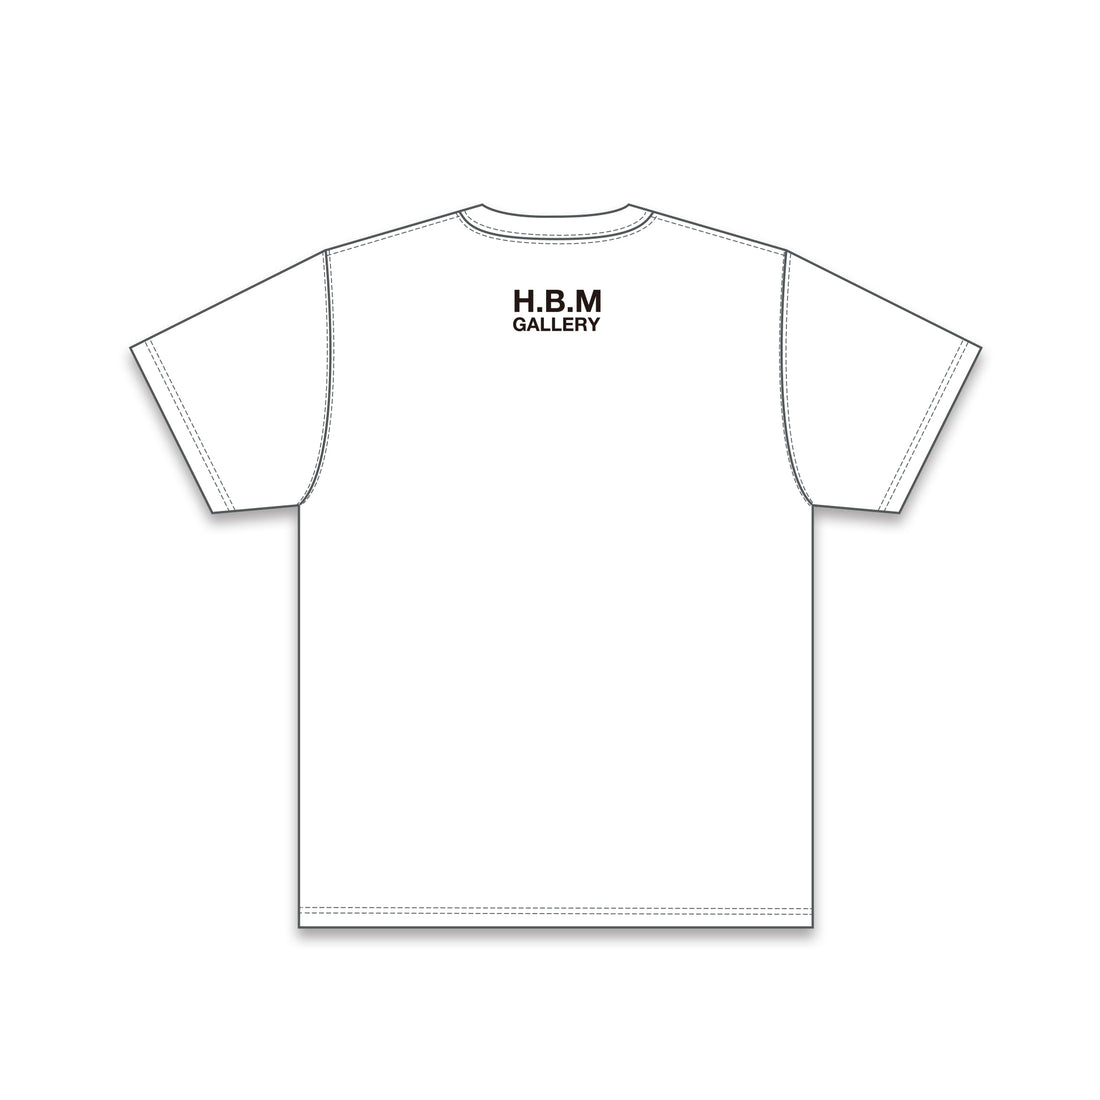 HBMG x Koala Picture Diary Character x Logo Collaboration T-shirt